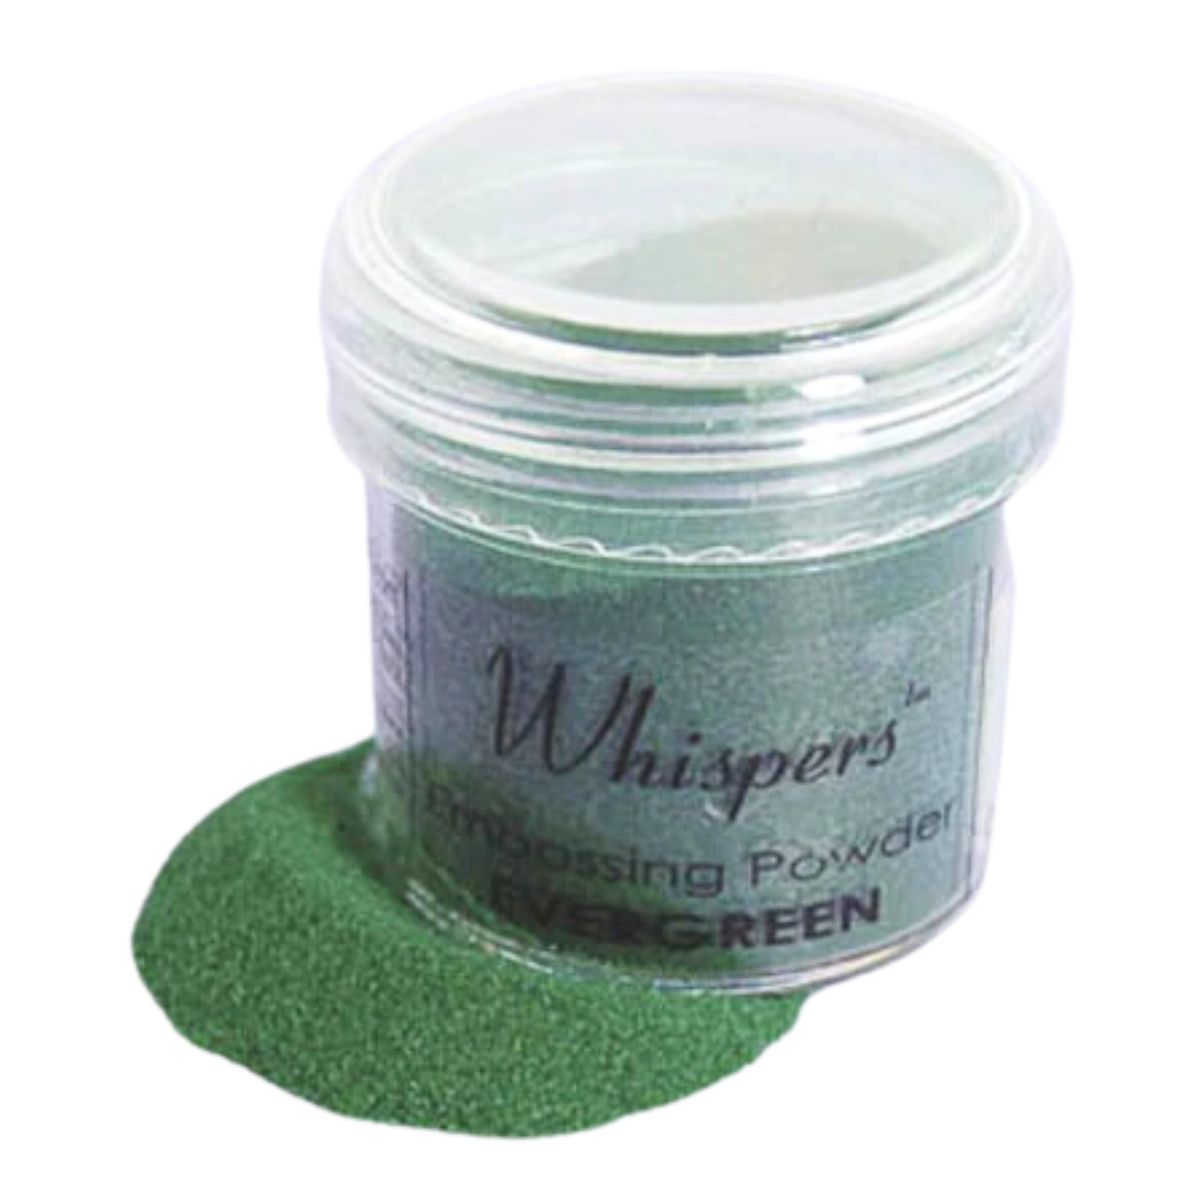 Whispers EverGreen Opaque Embossing Powder / Polvo de Relieve Verde